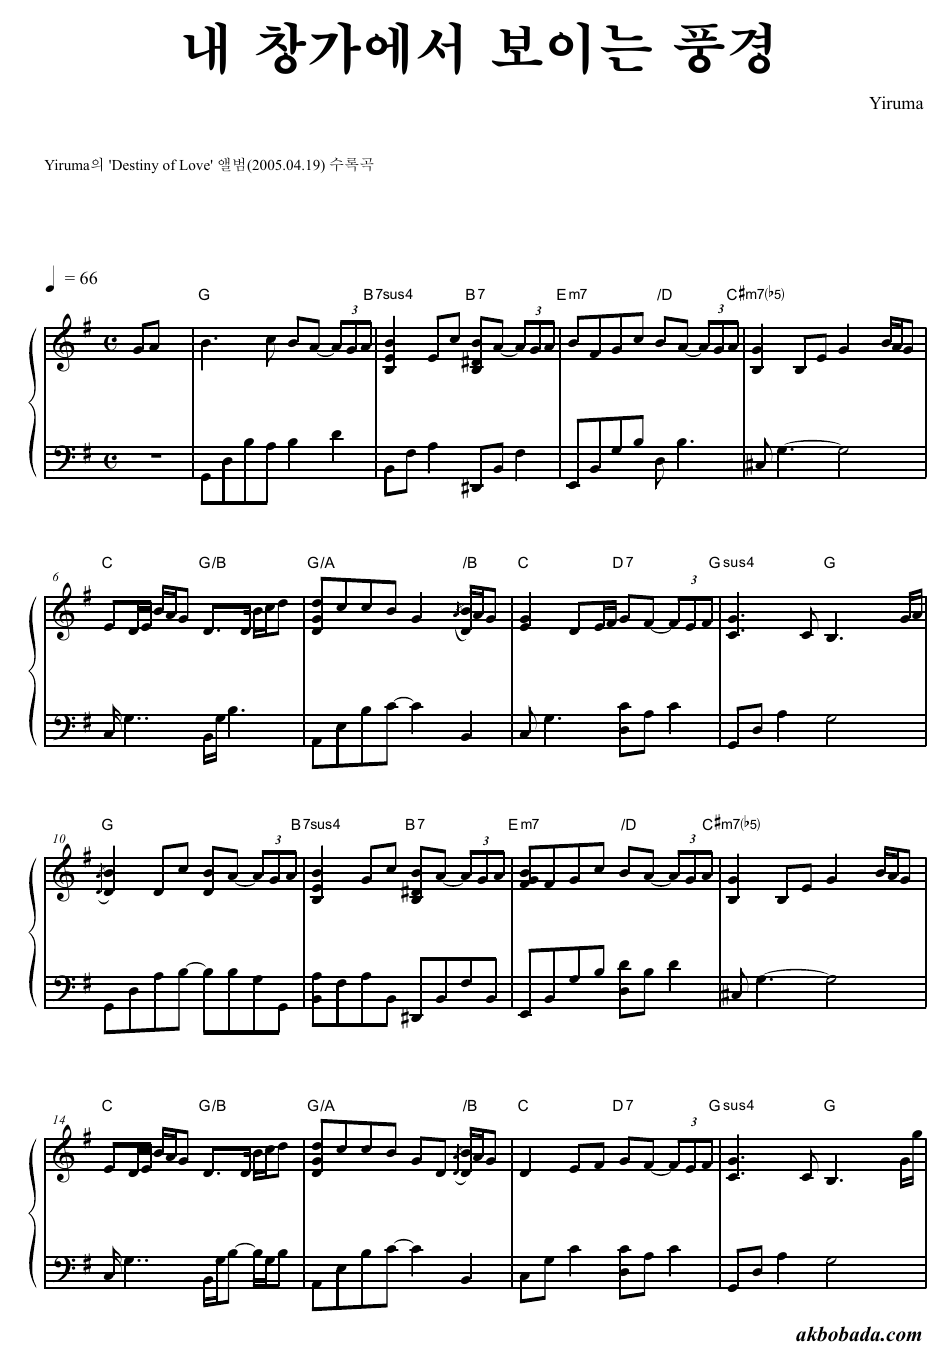 Yiruma - Destiny of Love Piano Sheet Music preview